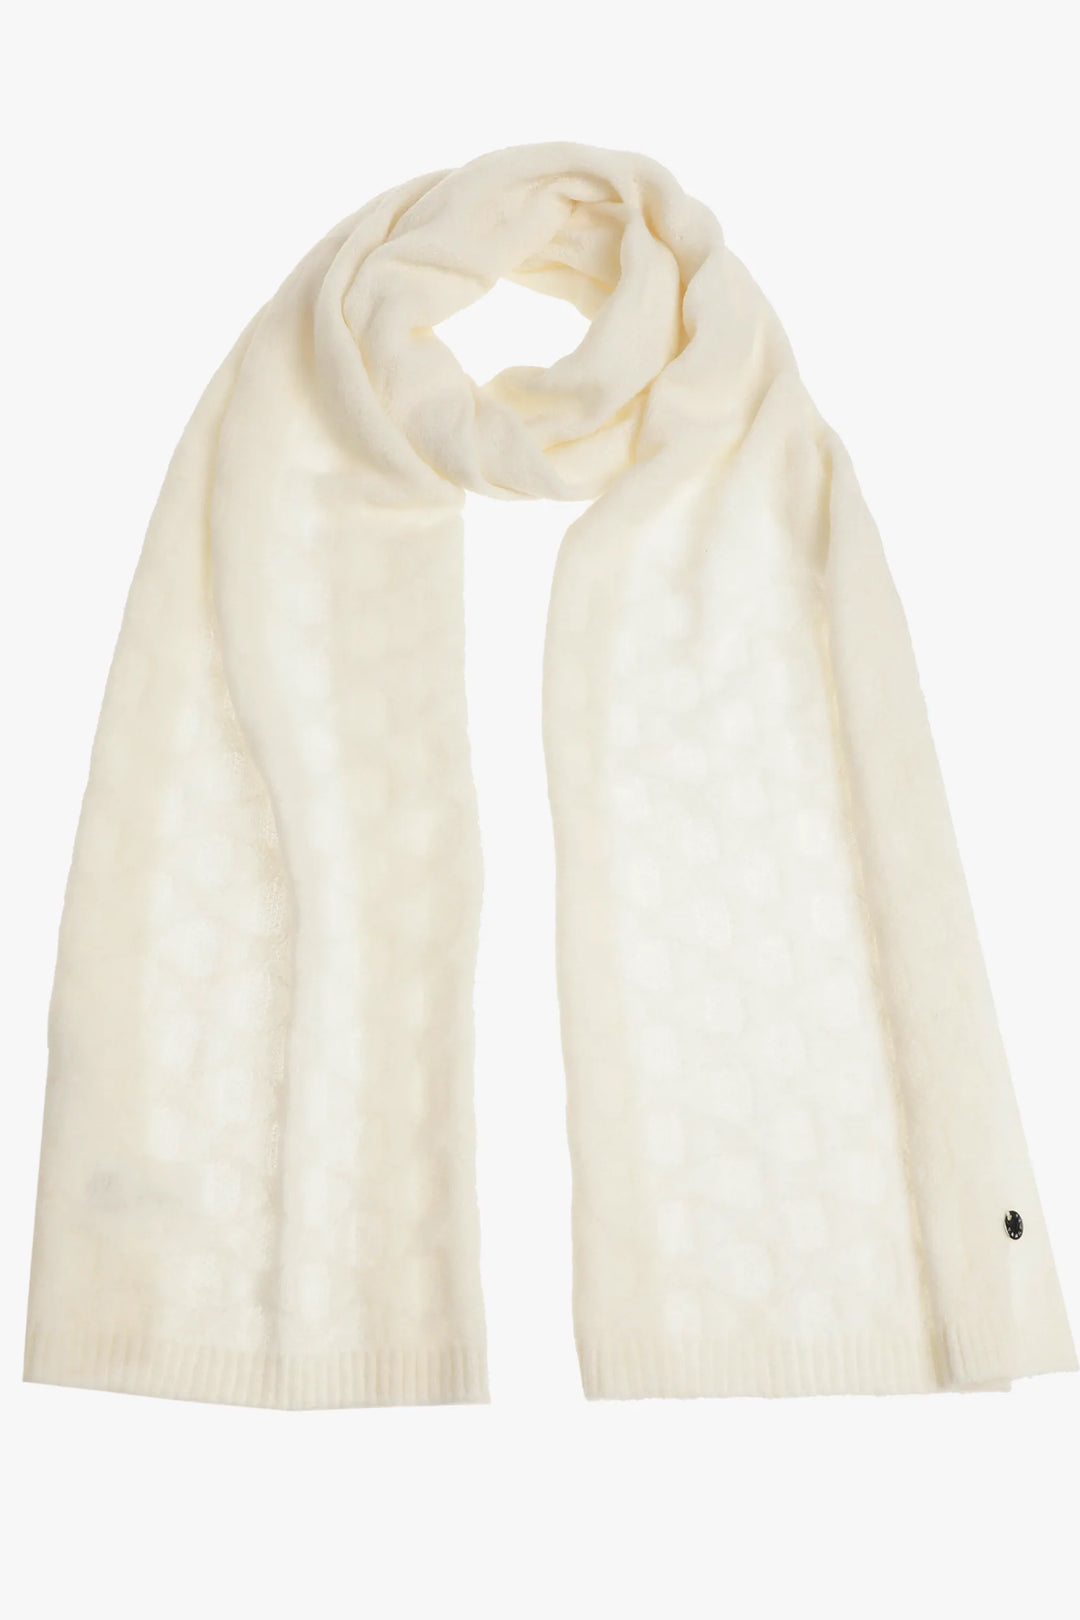 witte sjaal met originele fantasiesteek - xandres - 28978-01-3241-wit - grote maten - dameskleding - kledingwinkel - herent - leuven